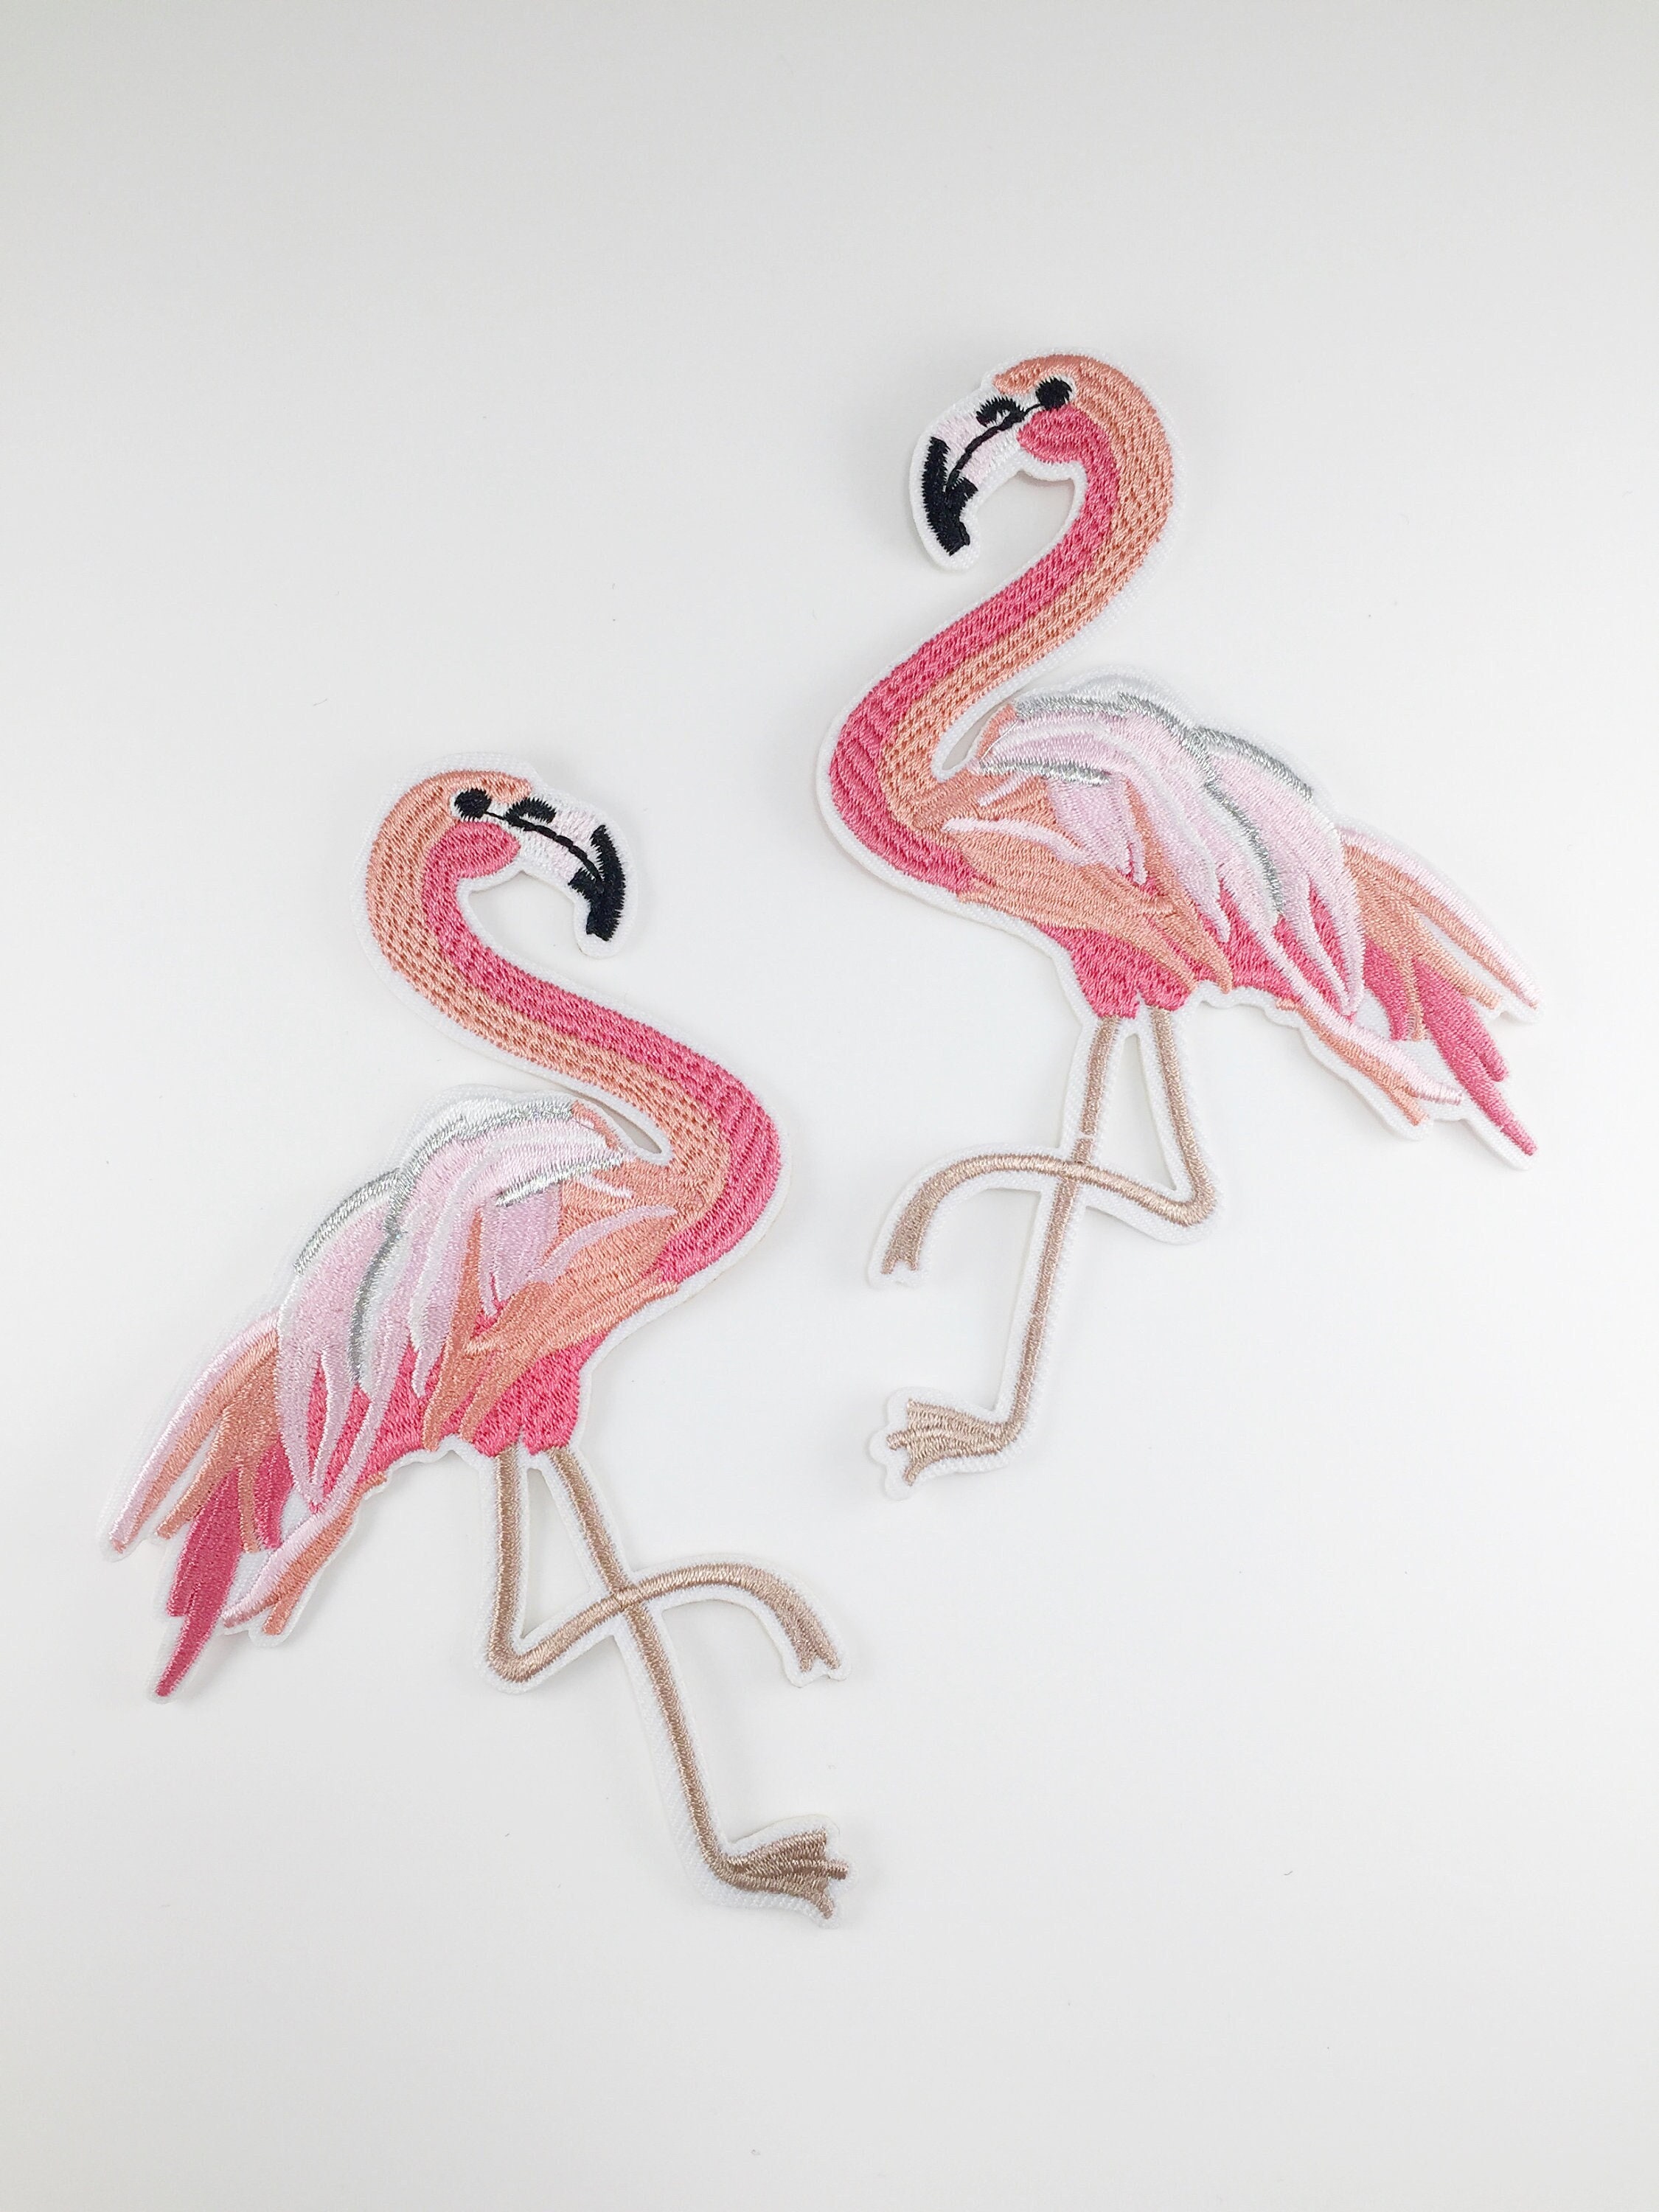 Tropical Flamingo Embroidery Patch Clothes Fabric Applique Sticker Craft